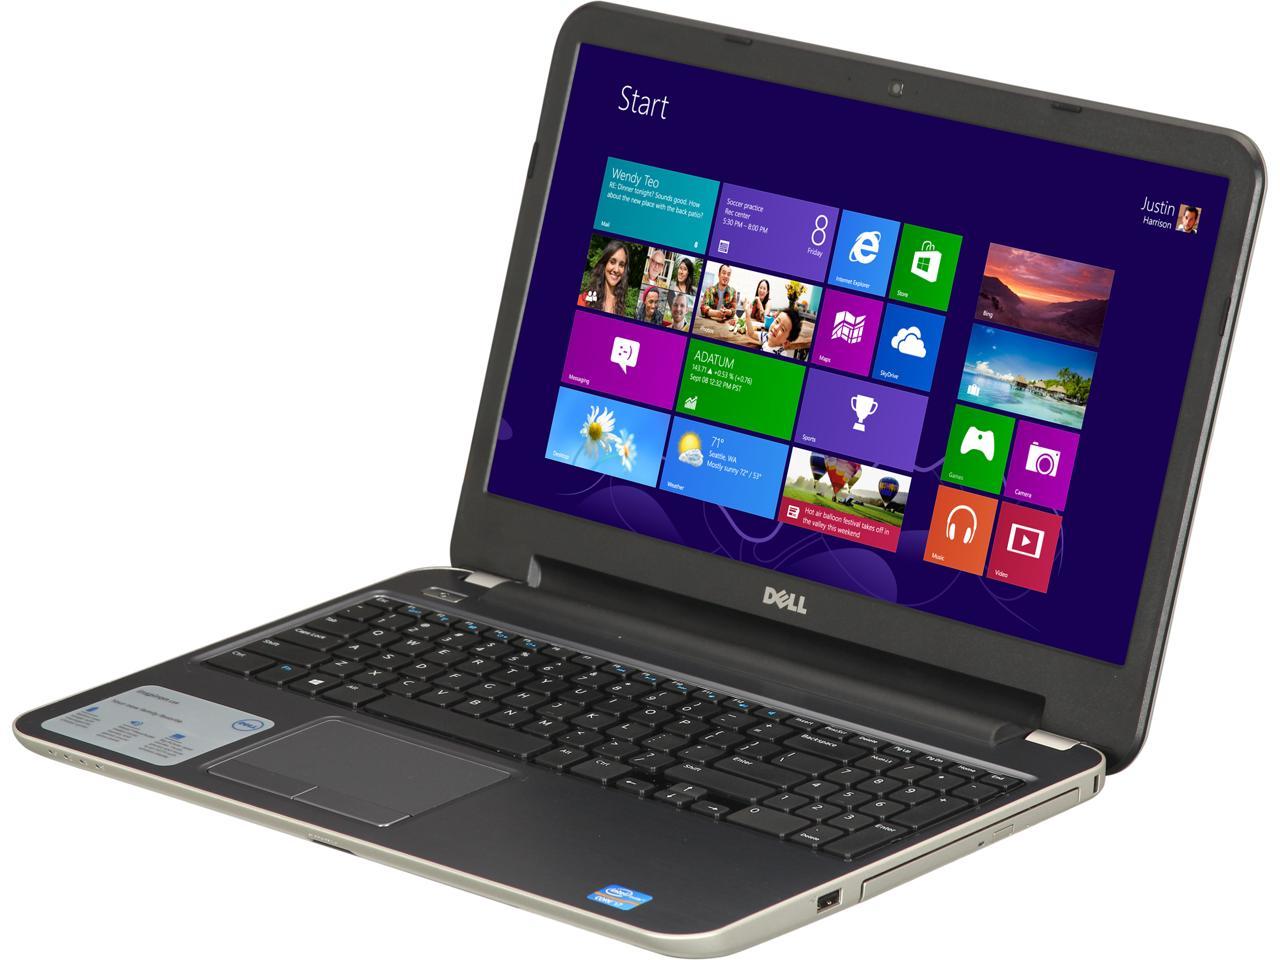 DELL Laptop Inspiron 15R (i15RM-4390SLV) Intel Core i7 3rd Gen 3537U (2.00 GHz) 8 GB Memory 1 TB HDD Intel HD Graphics 4000 15.6" Windows 8